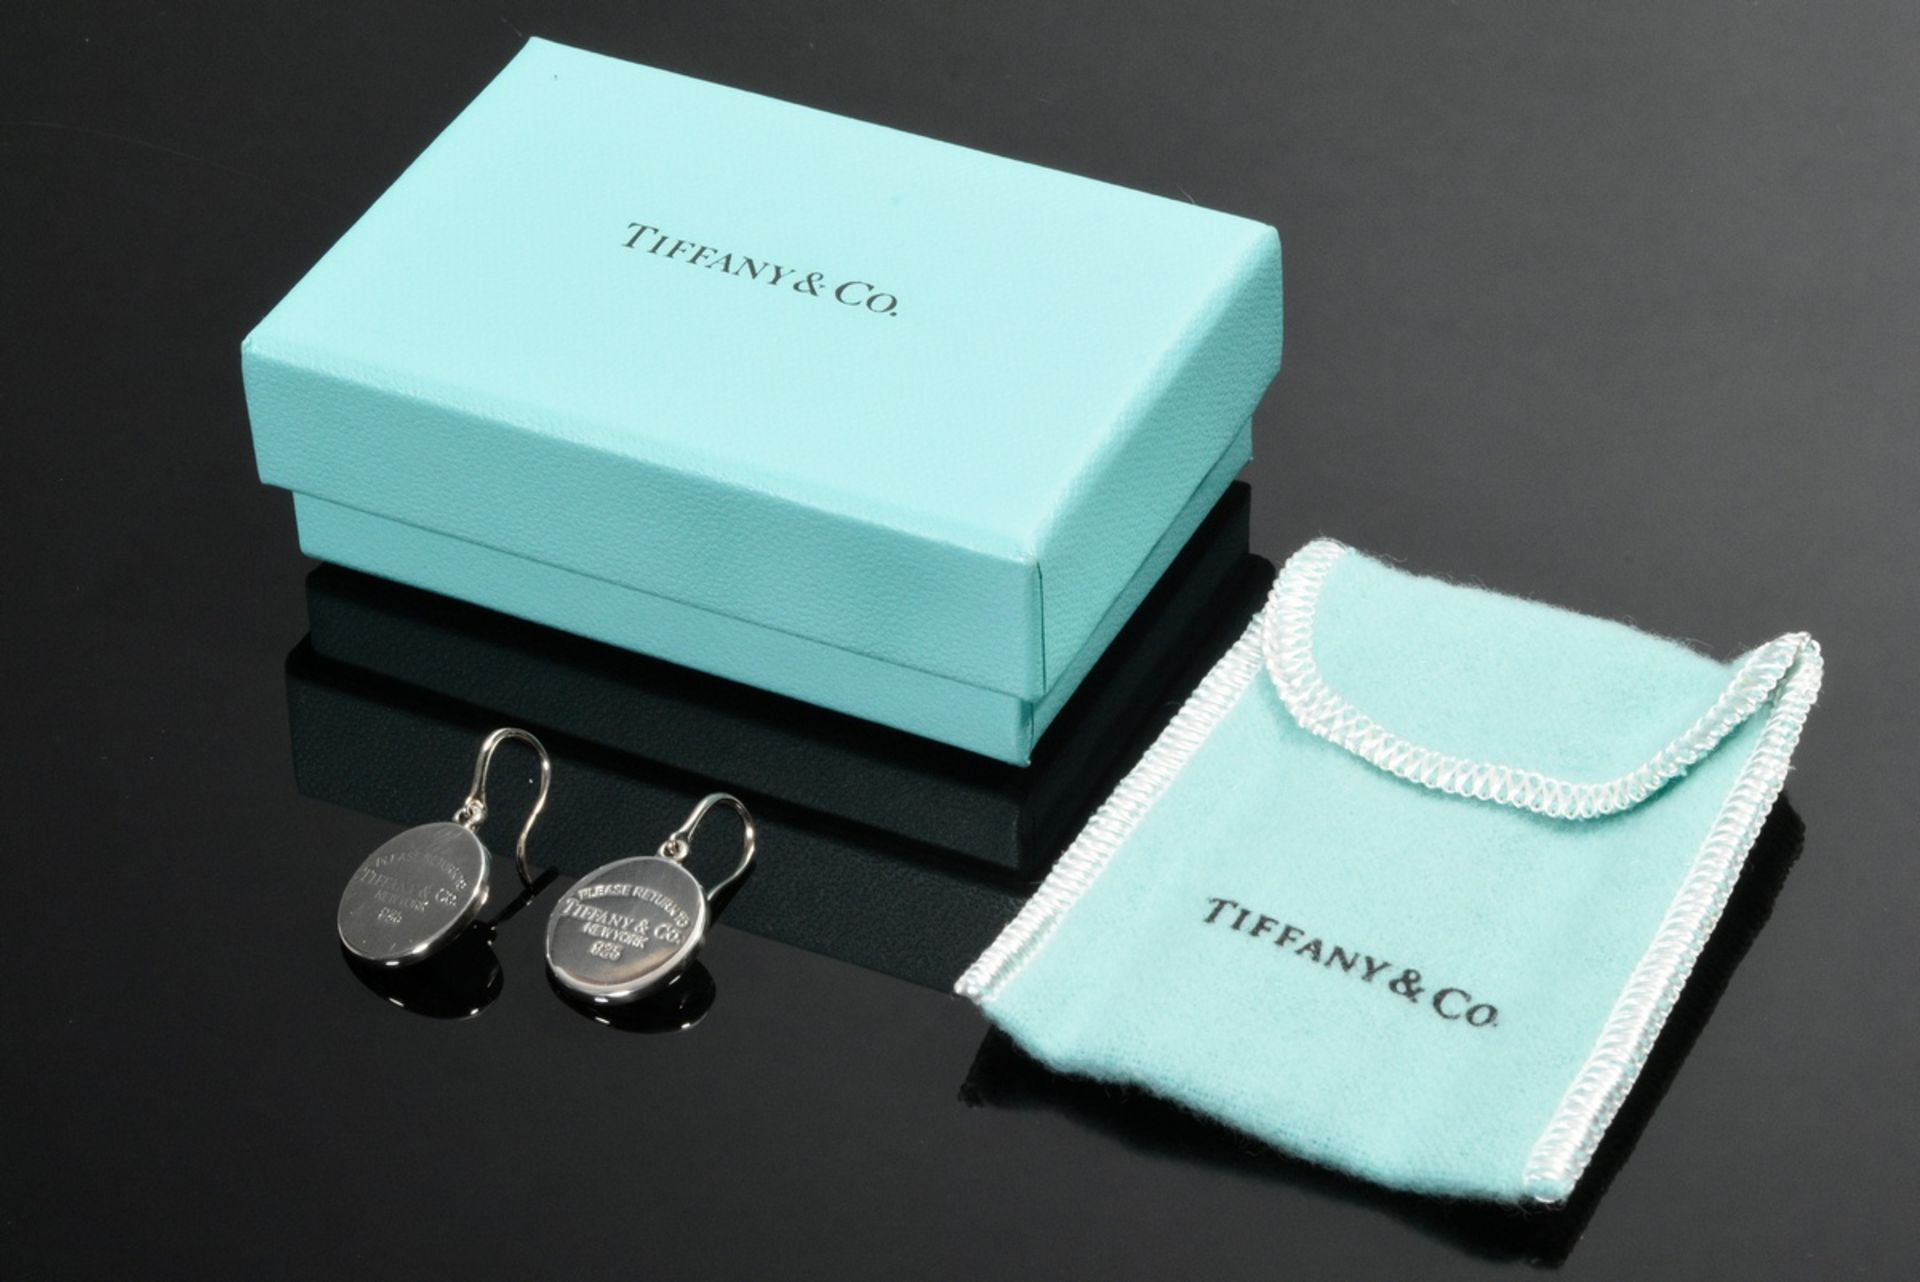 Paar Tiffany & Co Silber 925 Ohrhänger "Return to Tiffany“ auf runder Scheibe, 6,5g, Ø 15,6mm, Orig